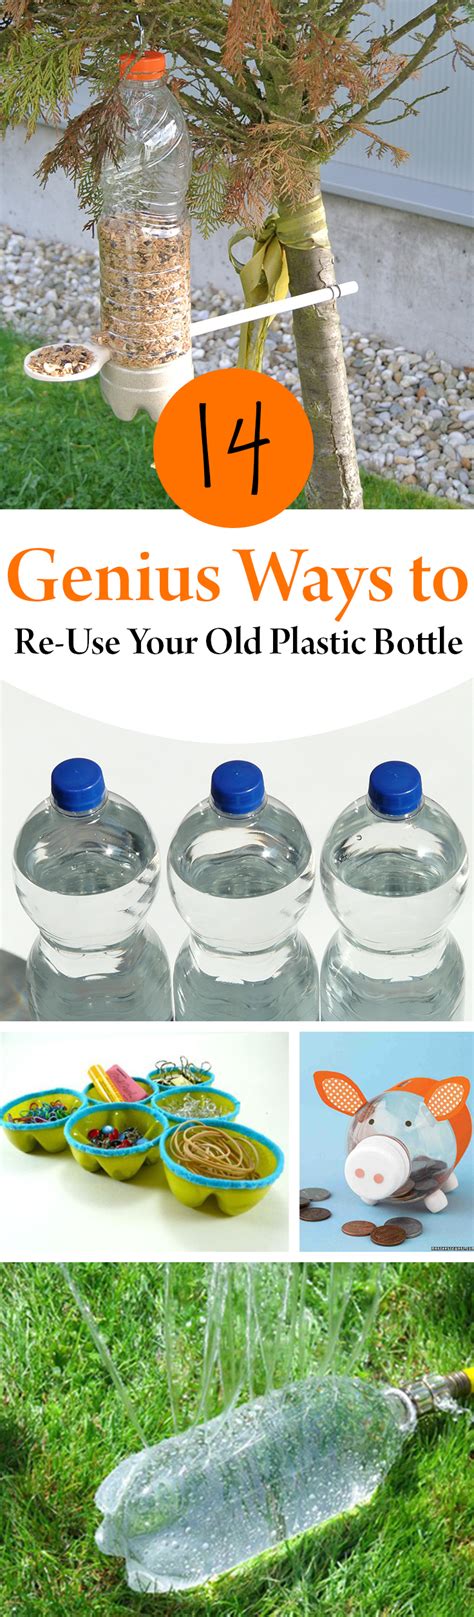 genius ways      plastic bottles wrapped  rust